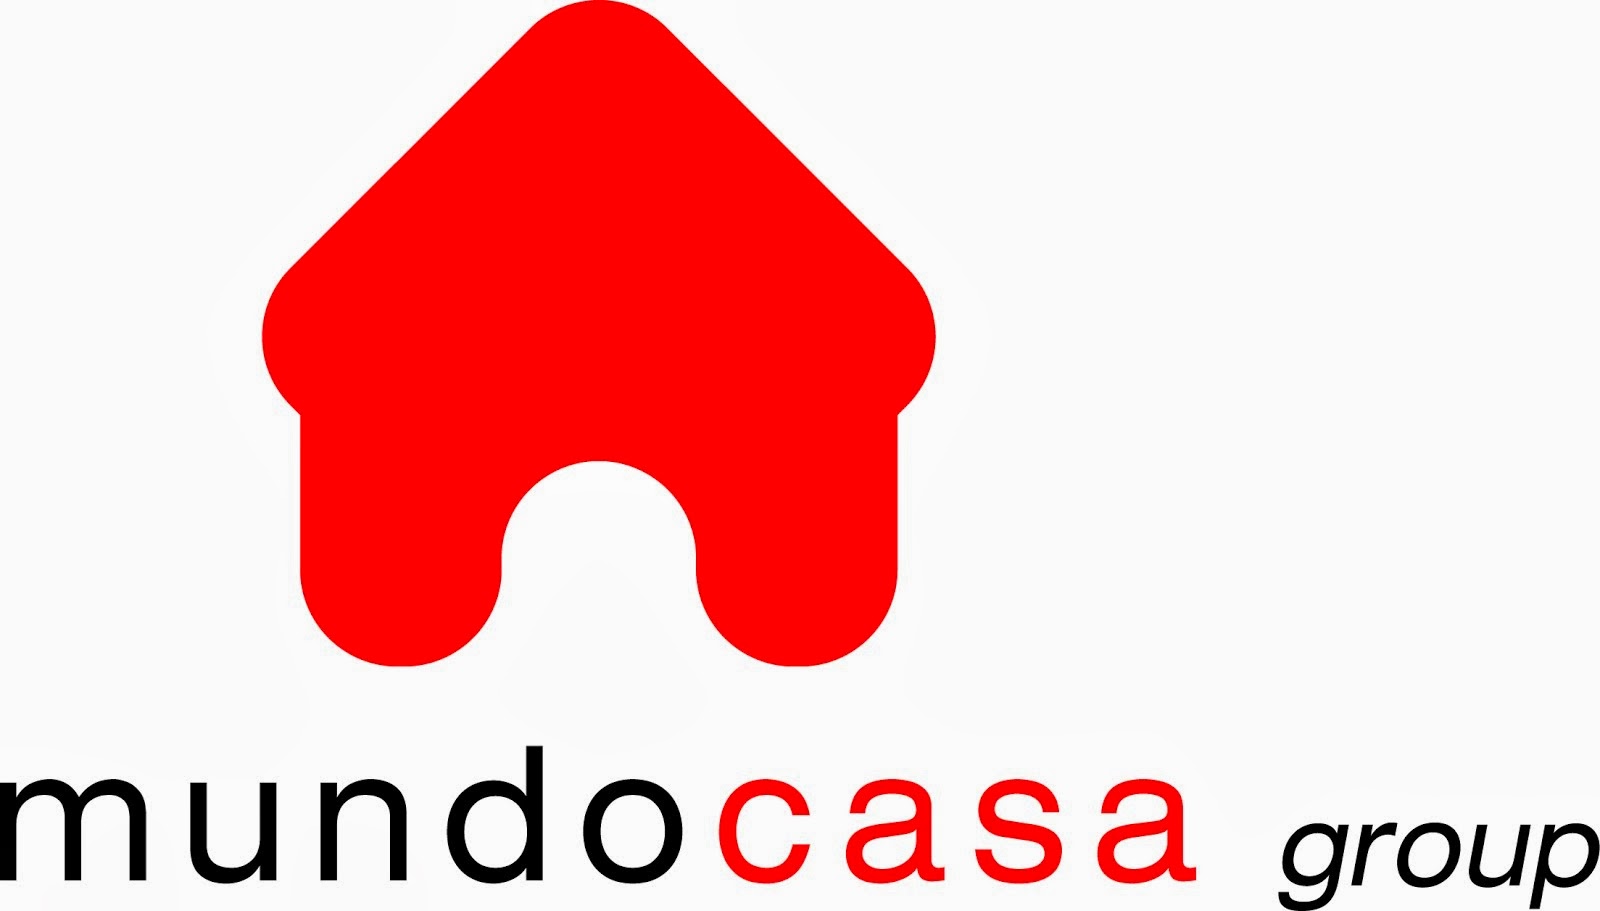 Mundocasa Group           "Solucions immobiliaries""